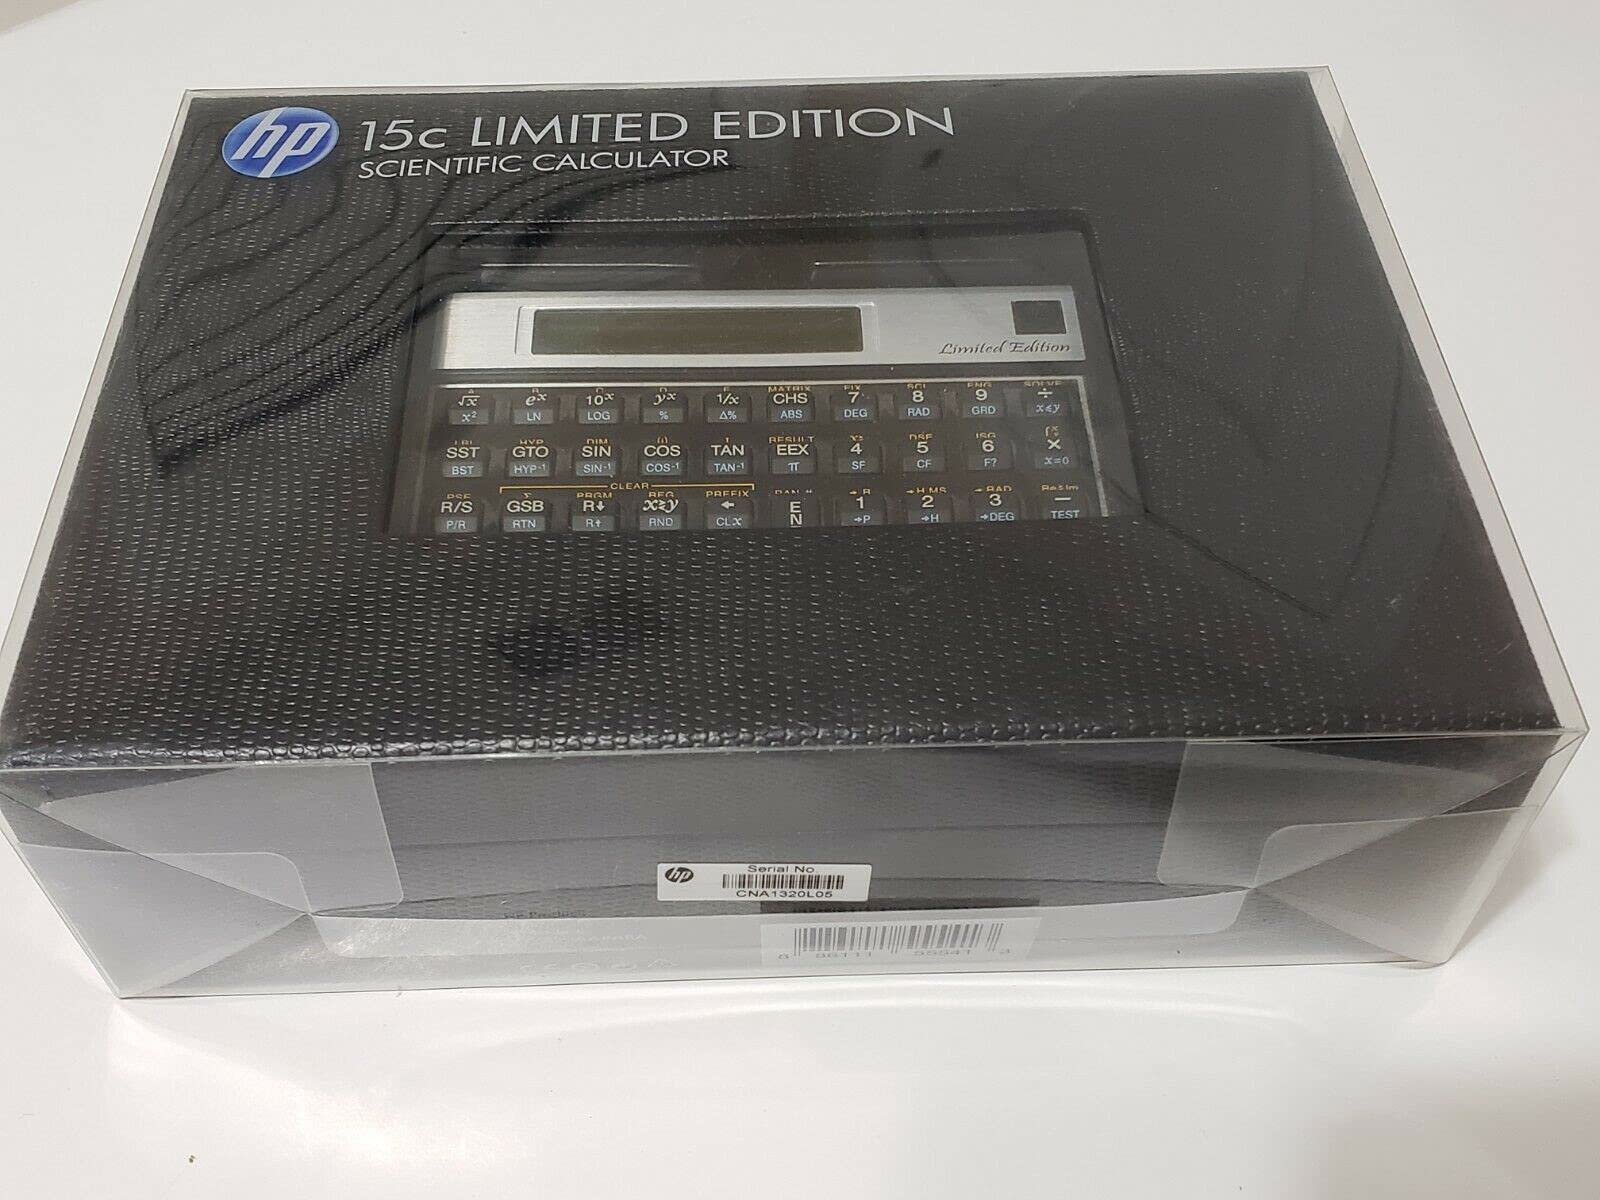 HP 15C Limited Edition Scientific Calculator